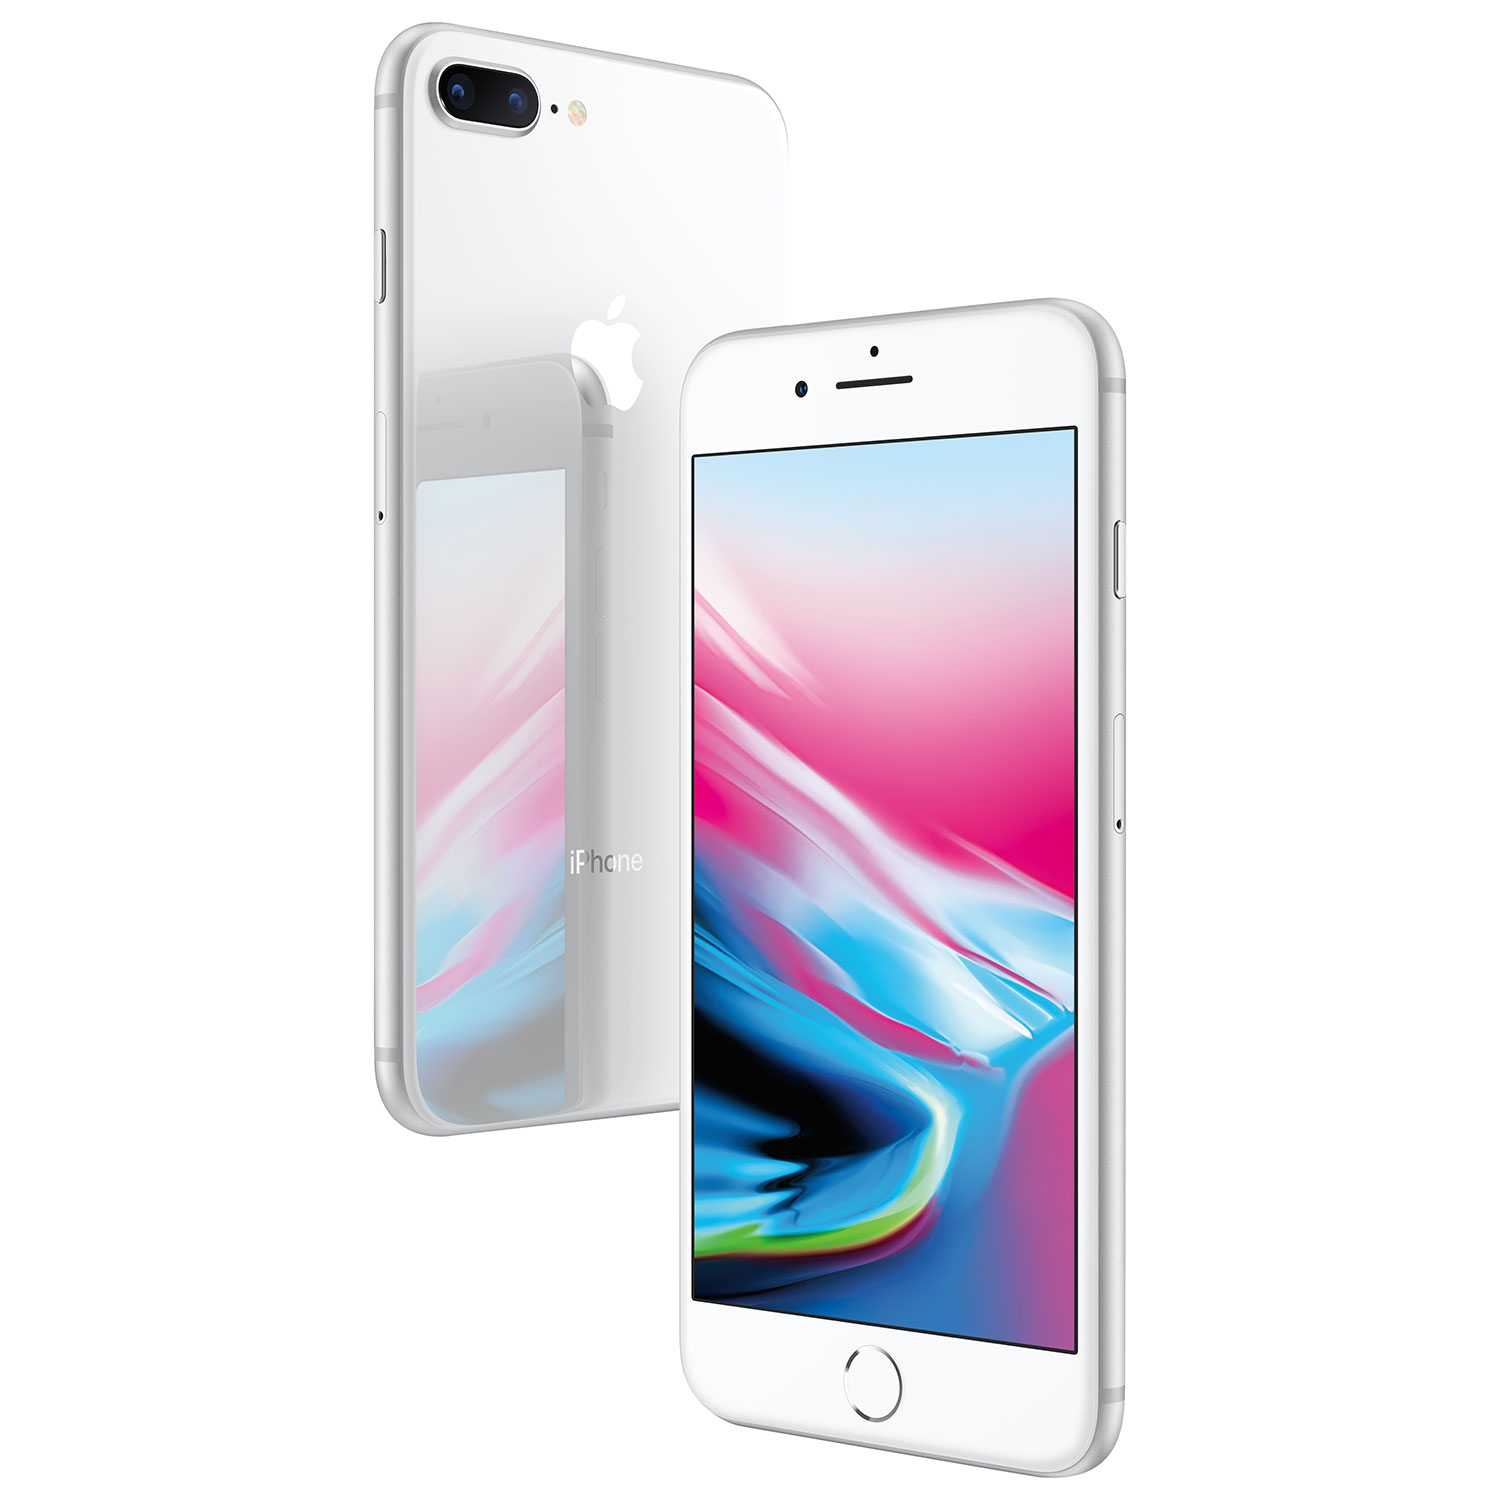 Refurbished (Excellent) - Apple iPhone 8 Plus 256GB Smartphone - Silver - Unlocked - Certified Refurbished